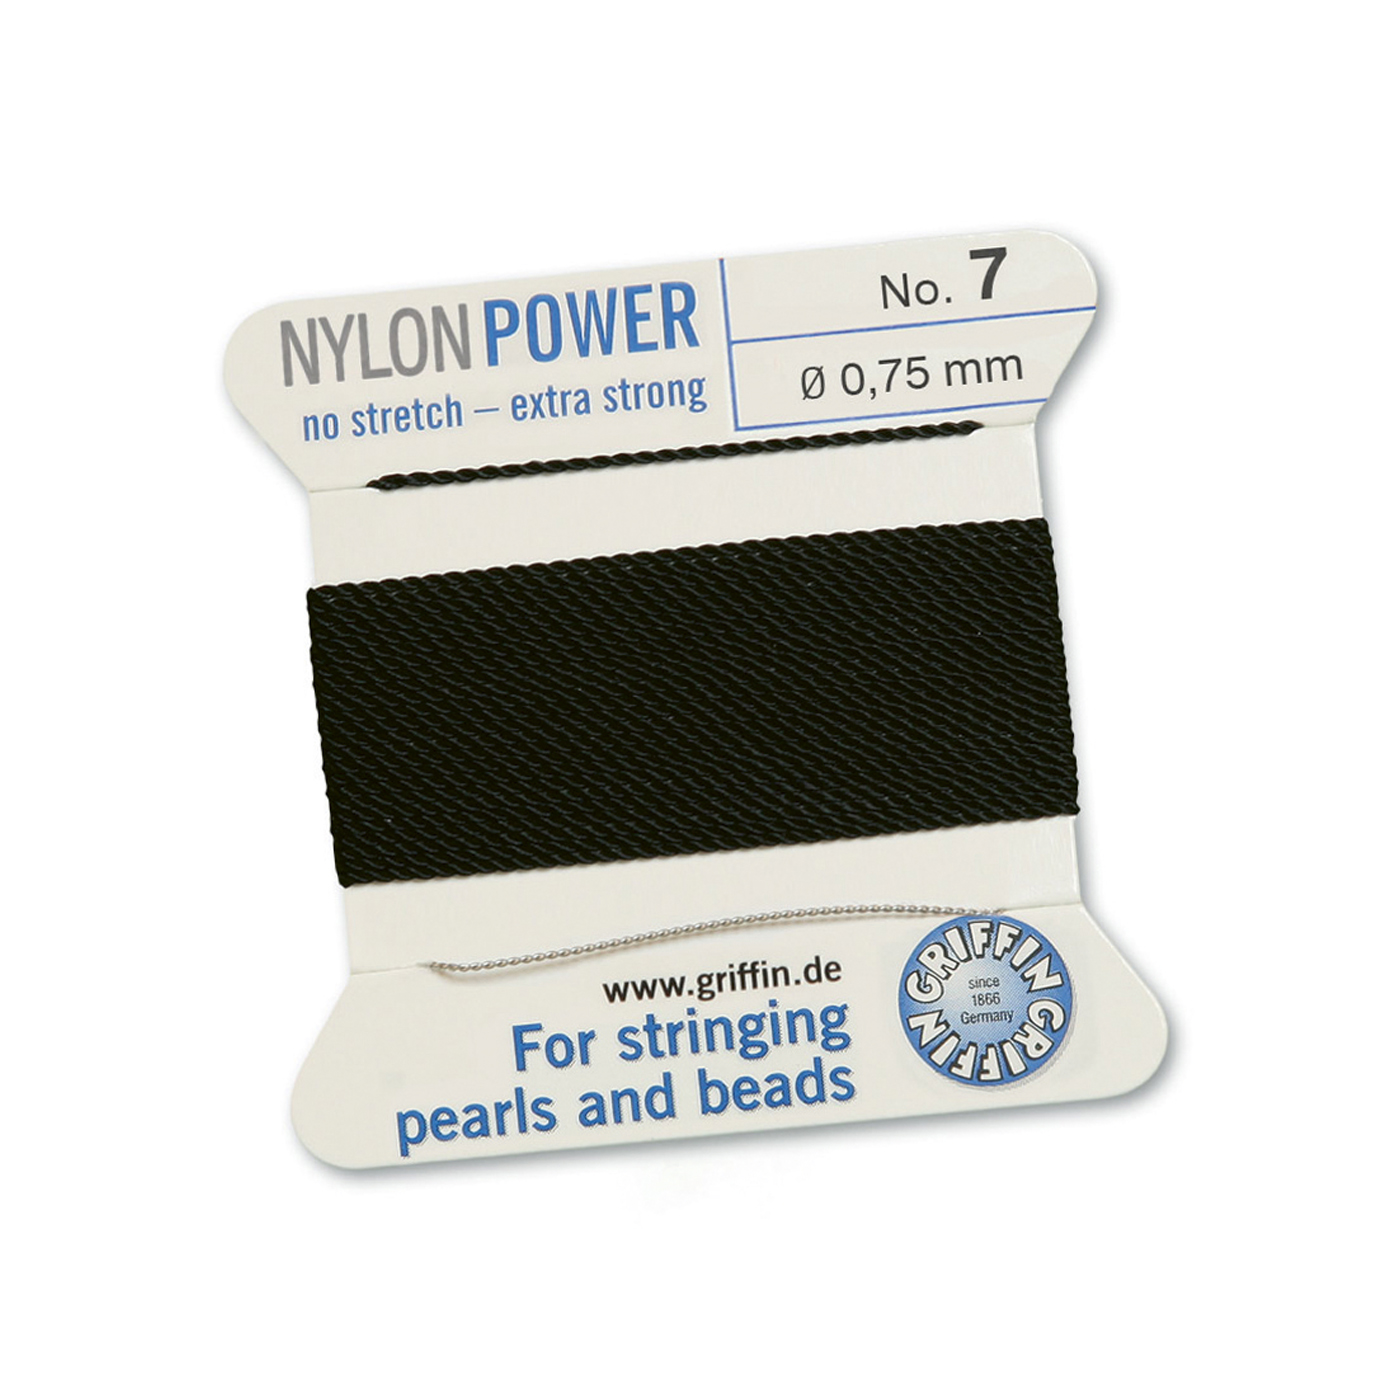 Bead Cord NylonPower, Black, No. 7 - 2 m